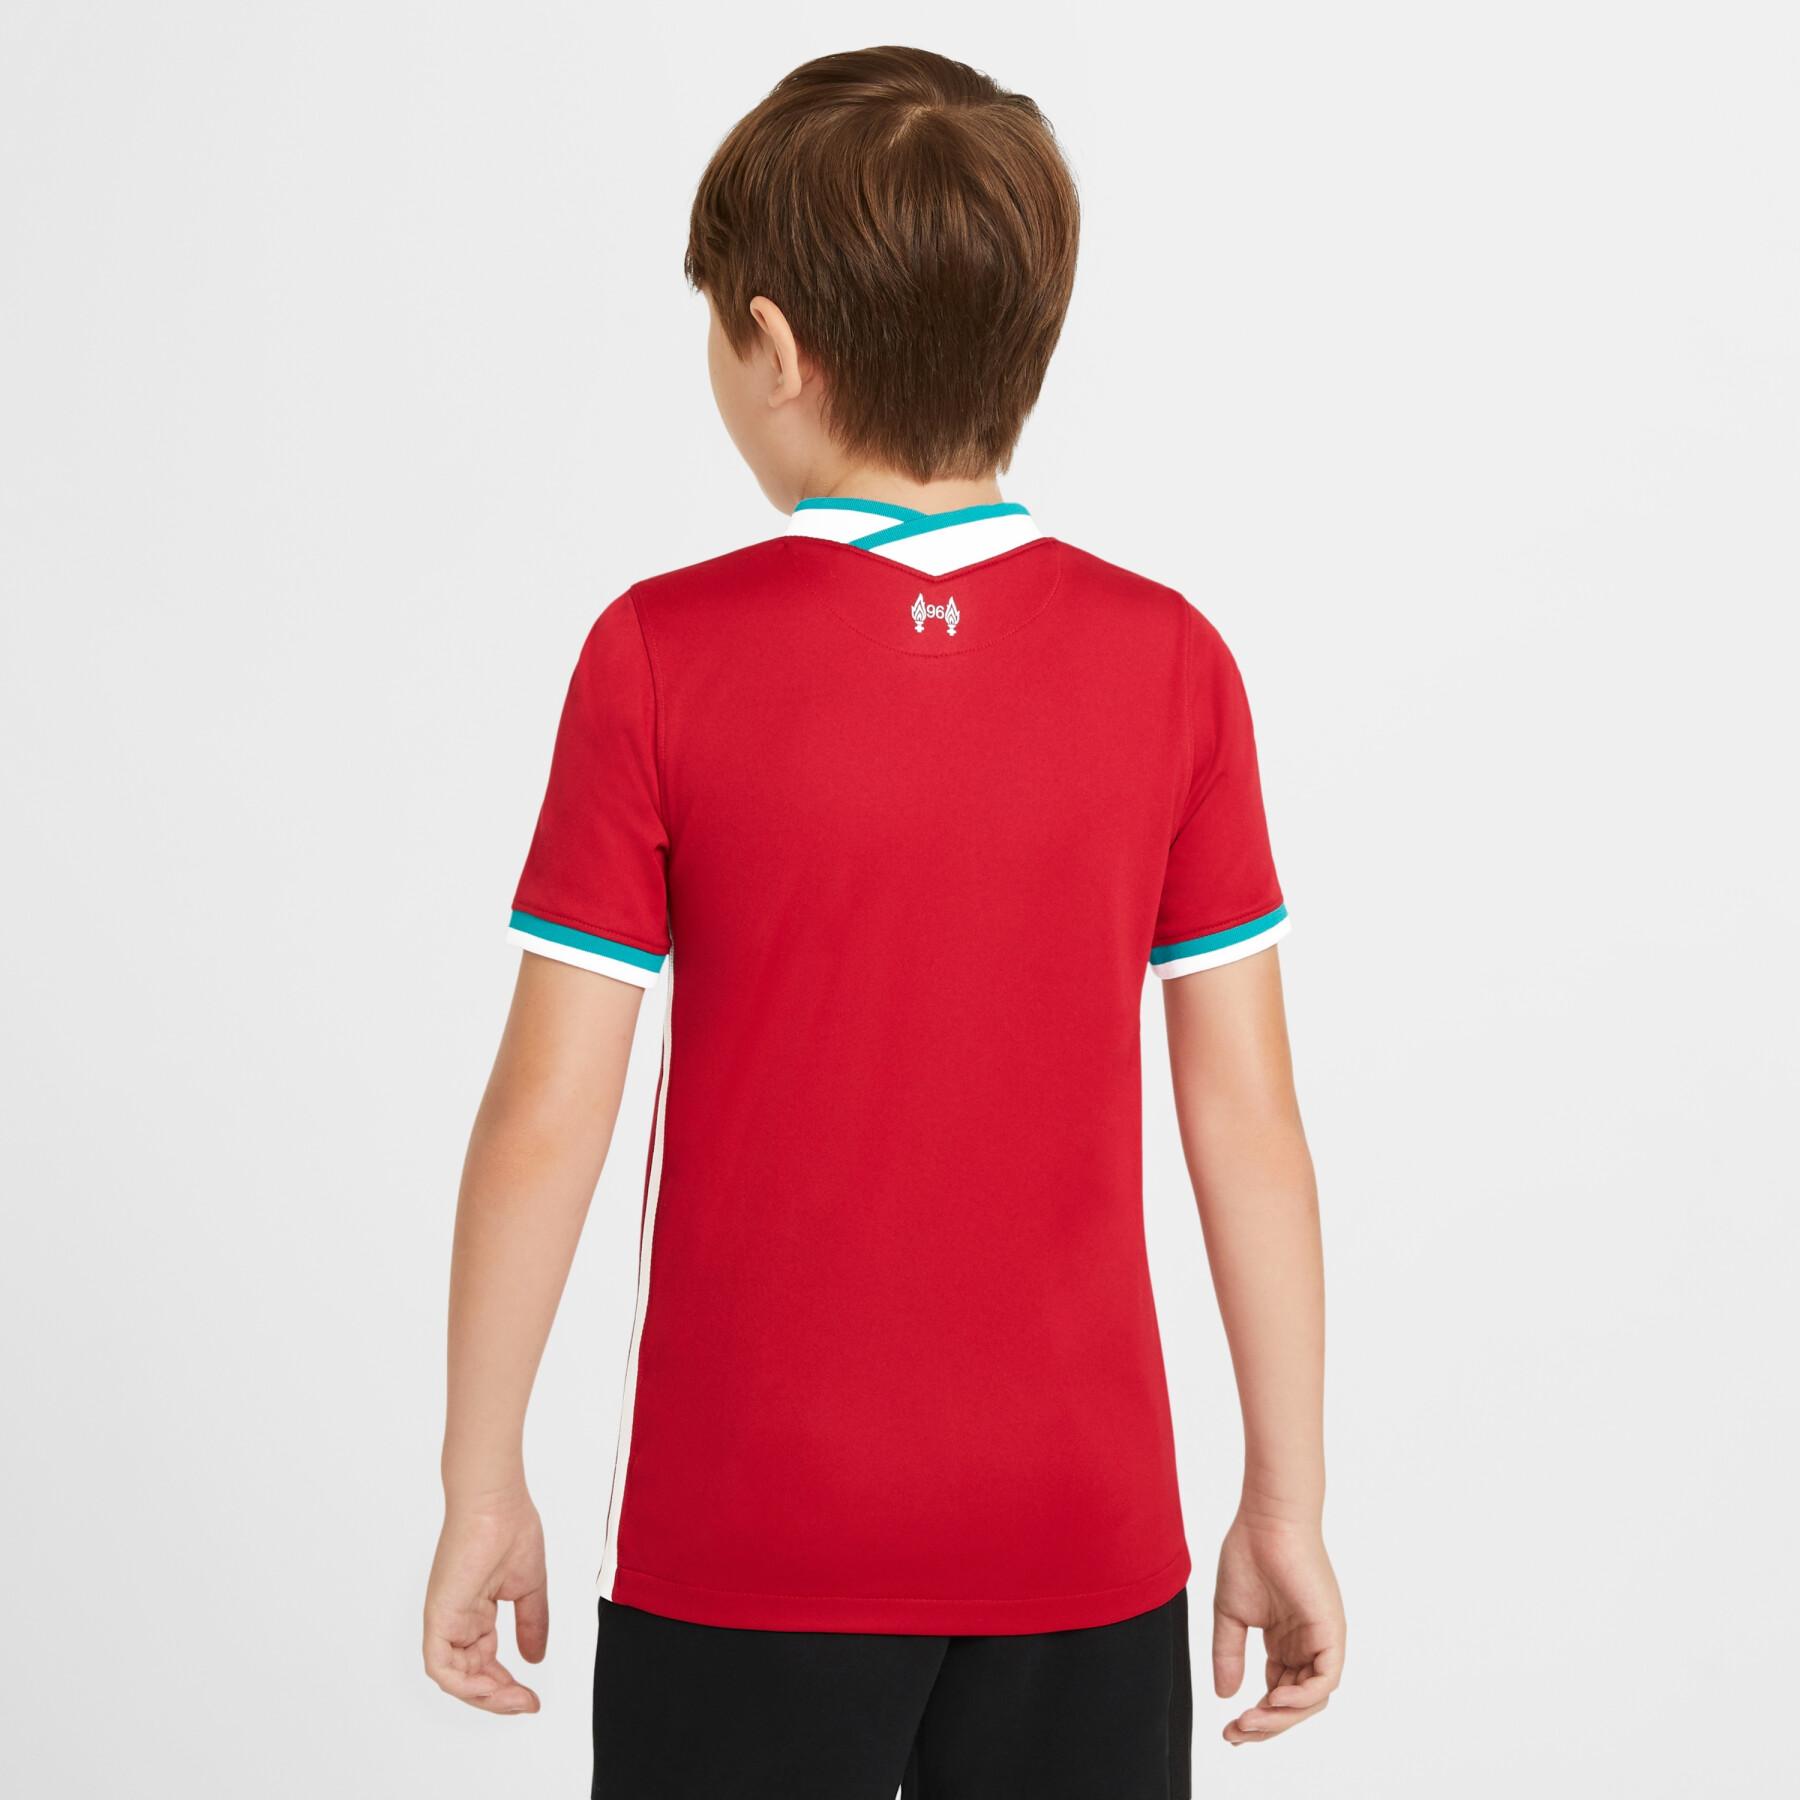 Camiseta primera equipación infantil Liverpool FC 2020/21